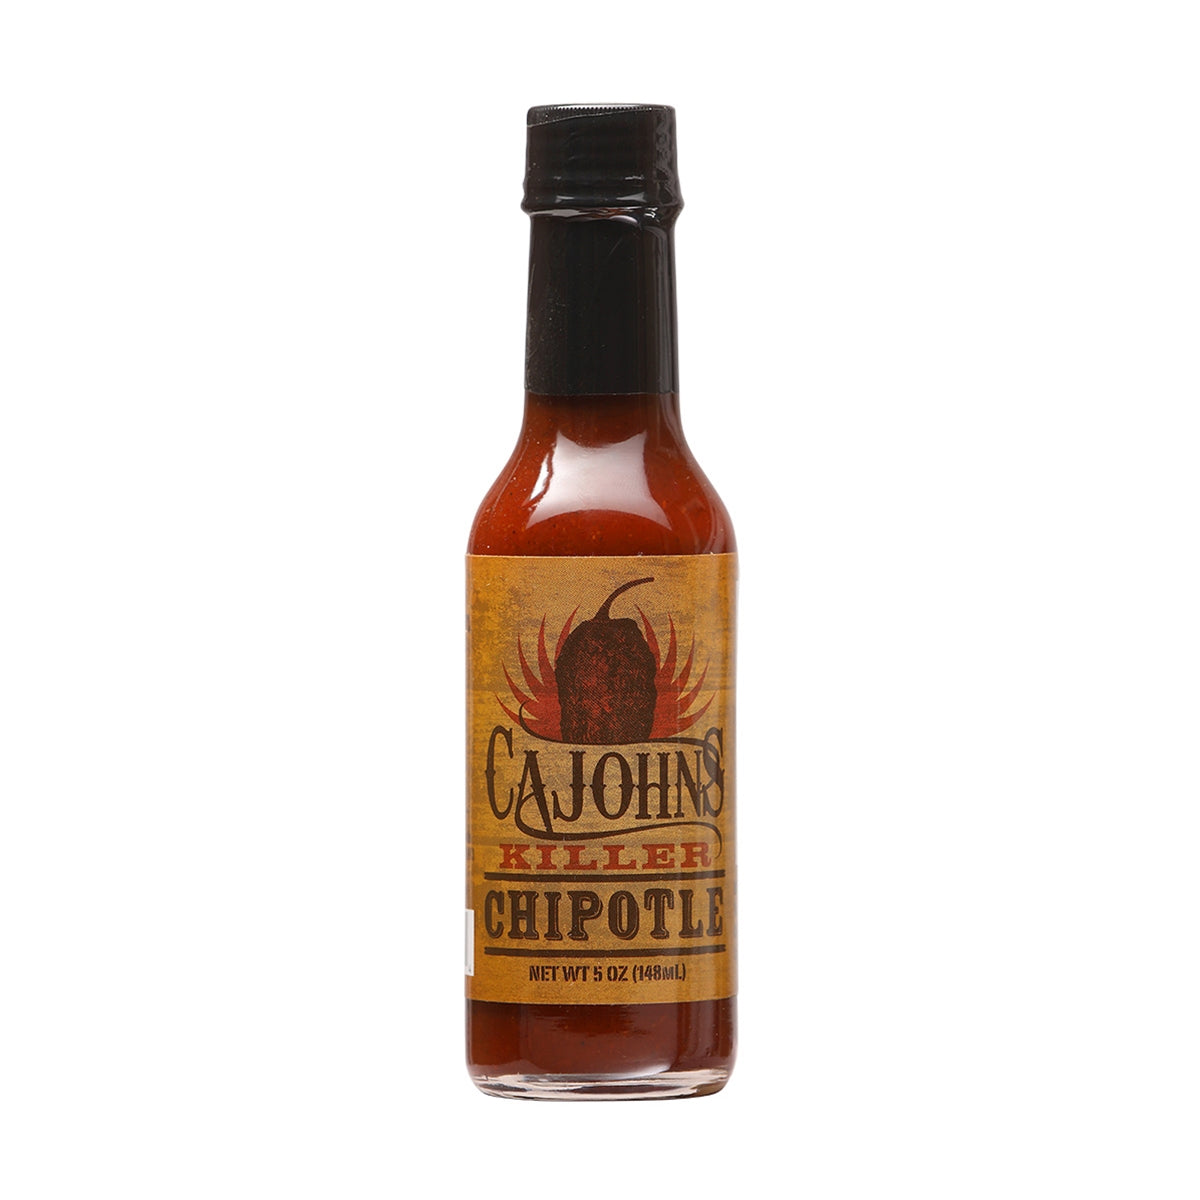 Hot Sauce CaJohns Killer Chipotle 5 oz Heat 6